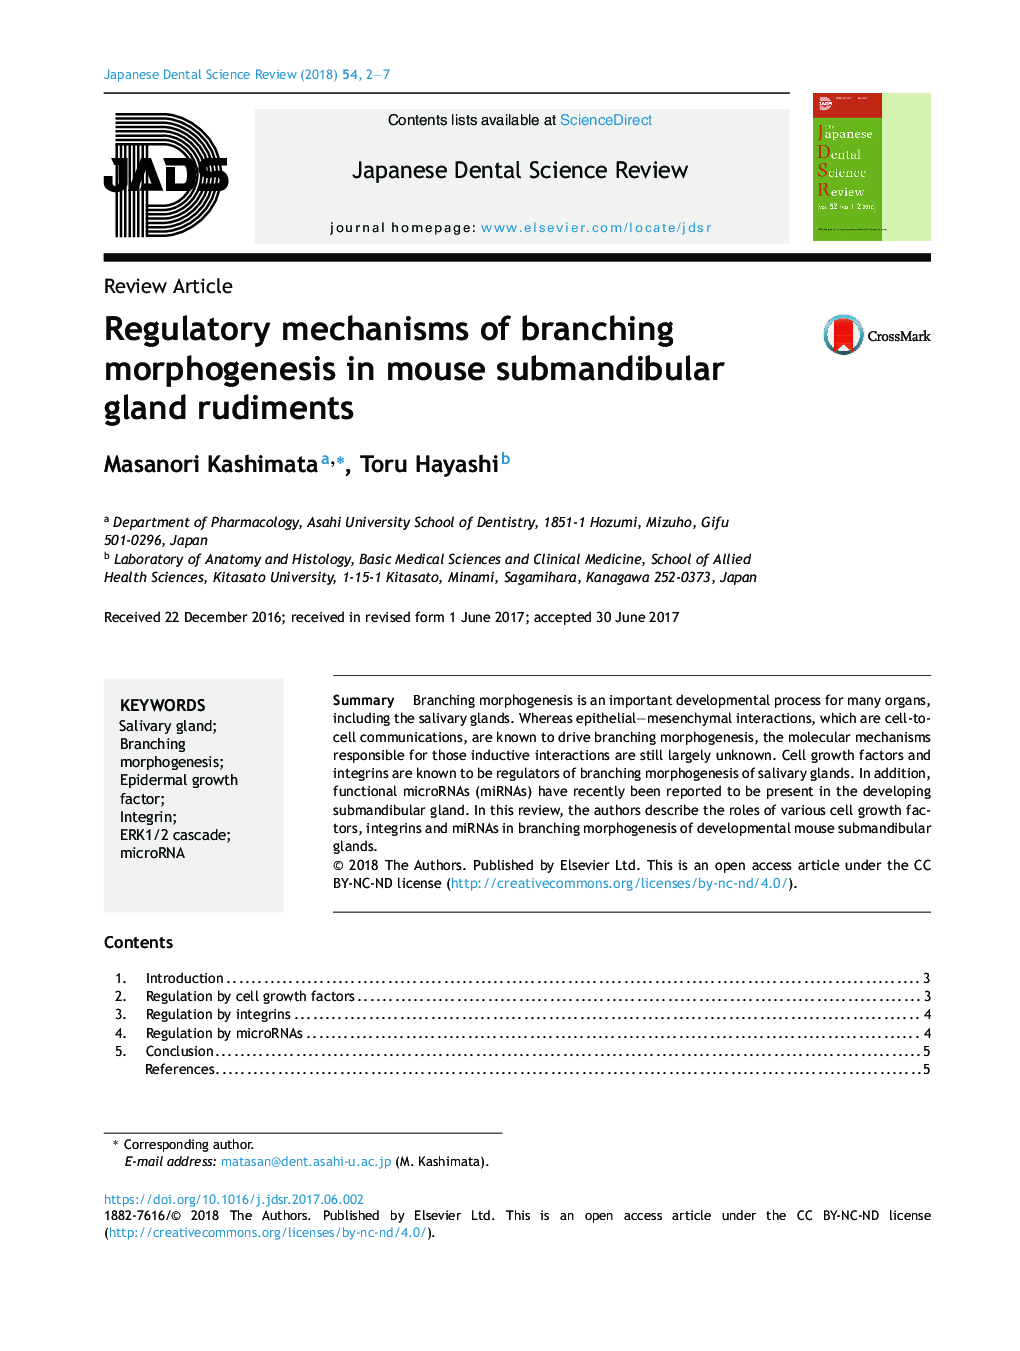 Regulatory mechanisms of branching morphogenesis in mouse submandibular gland rudiments